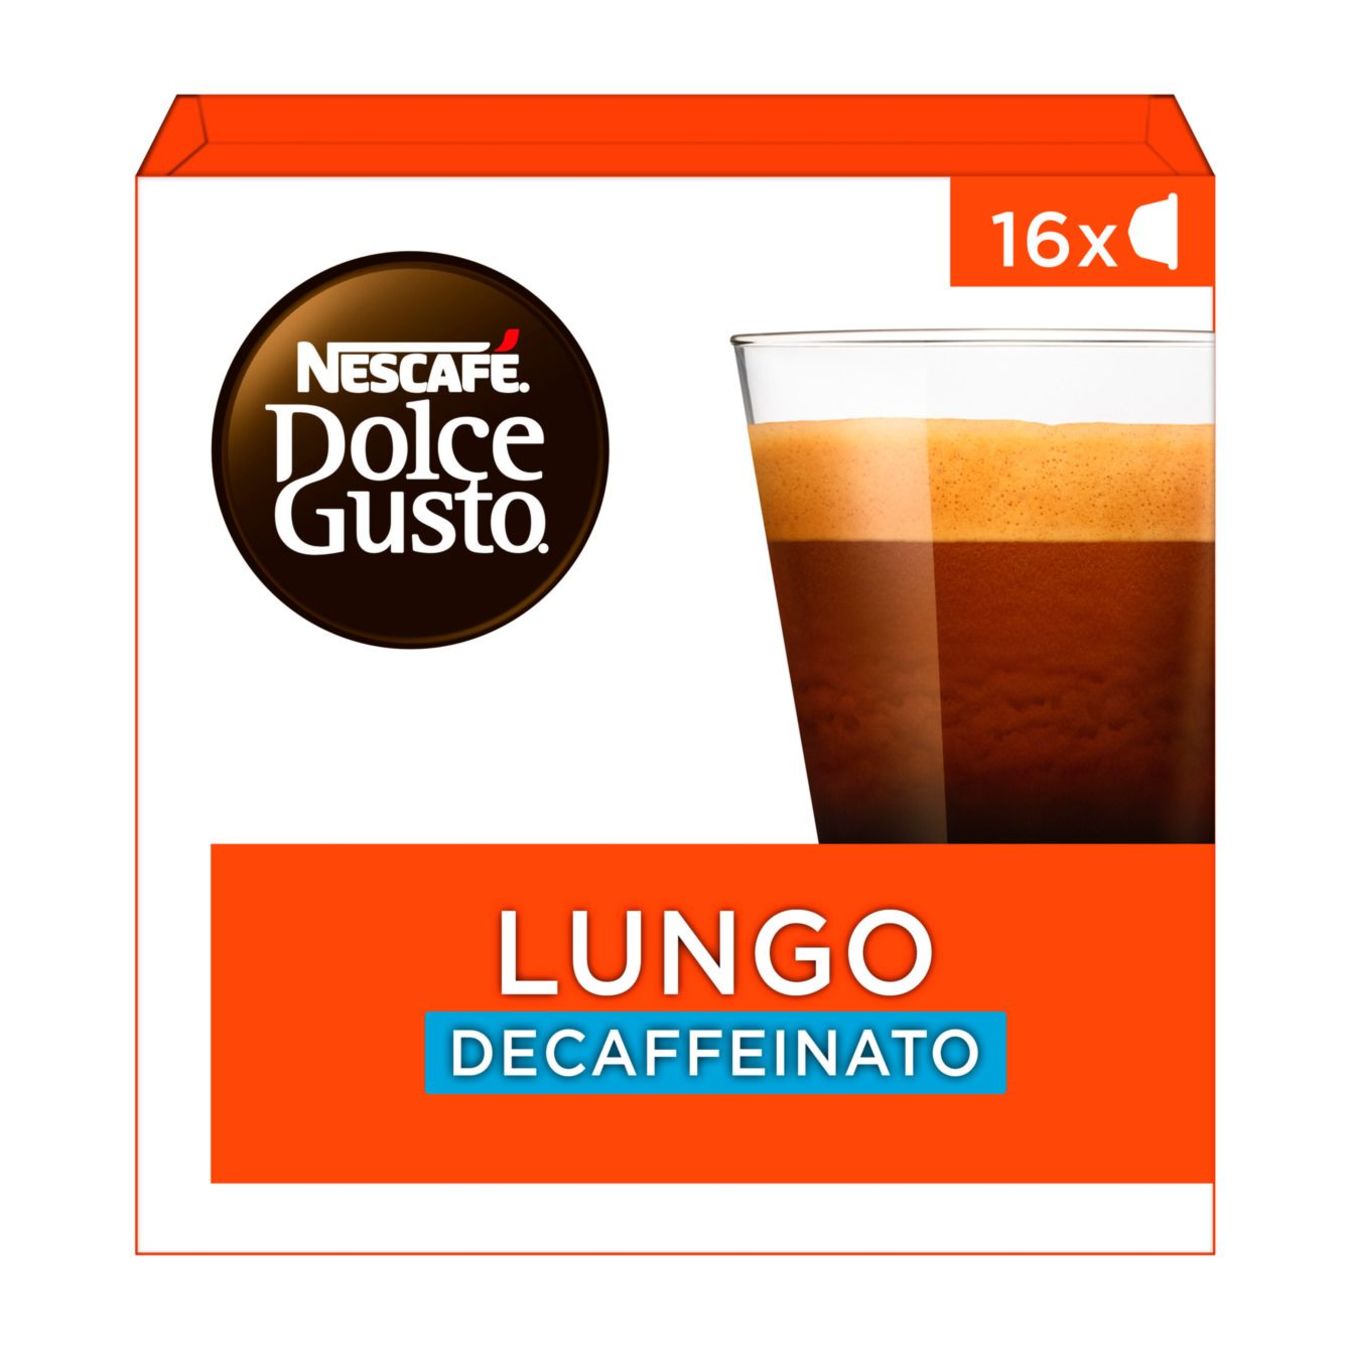 Dolce gusto decaffeinato koffie capsules online Coop.nl | Coop